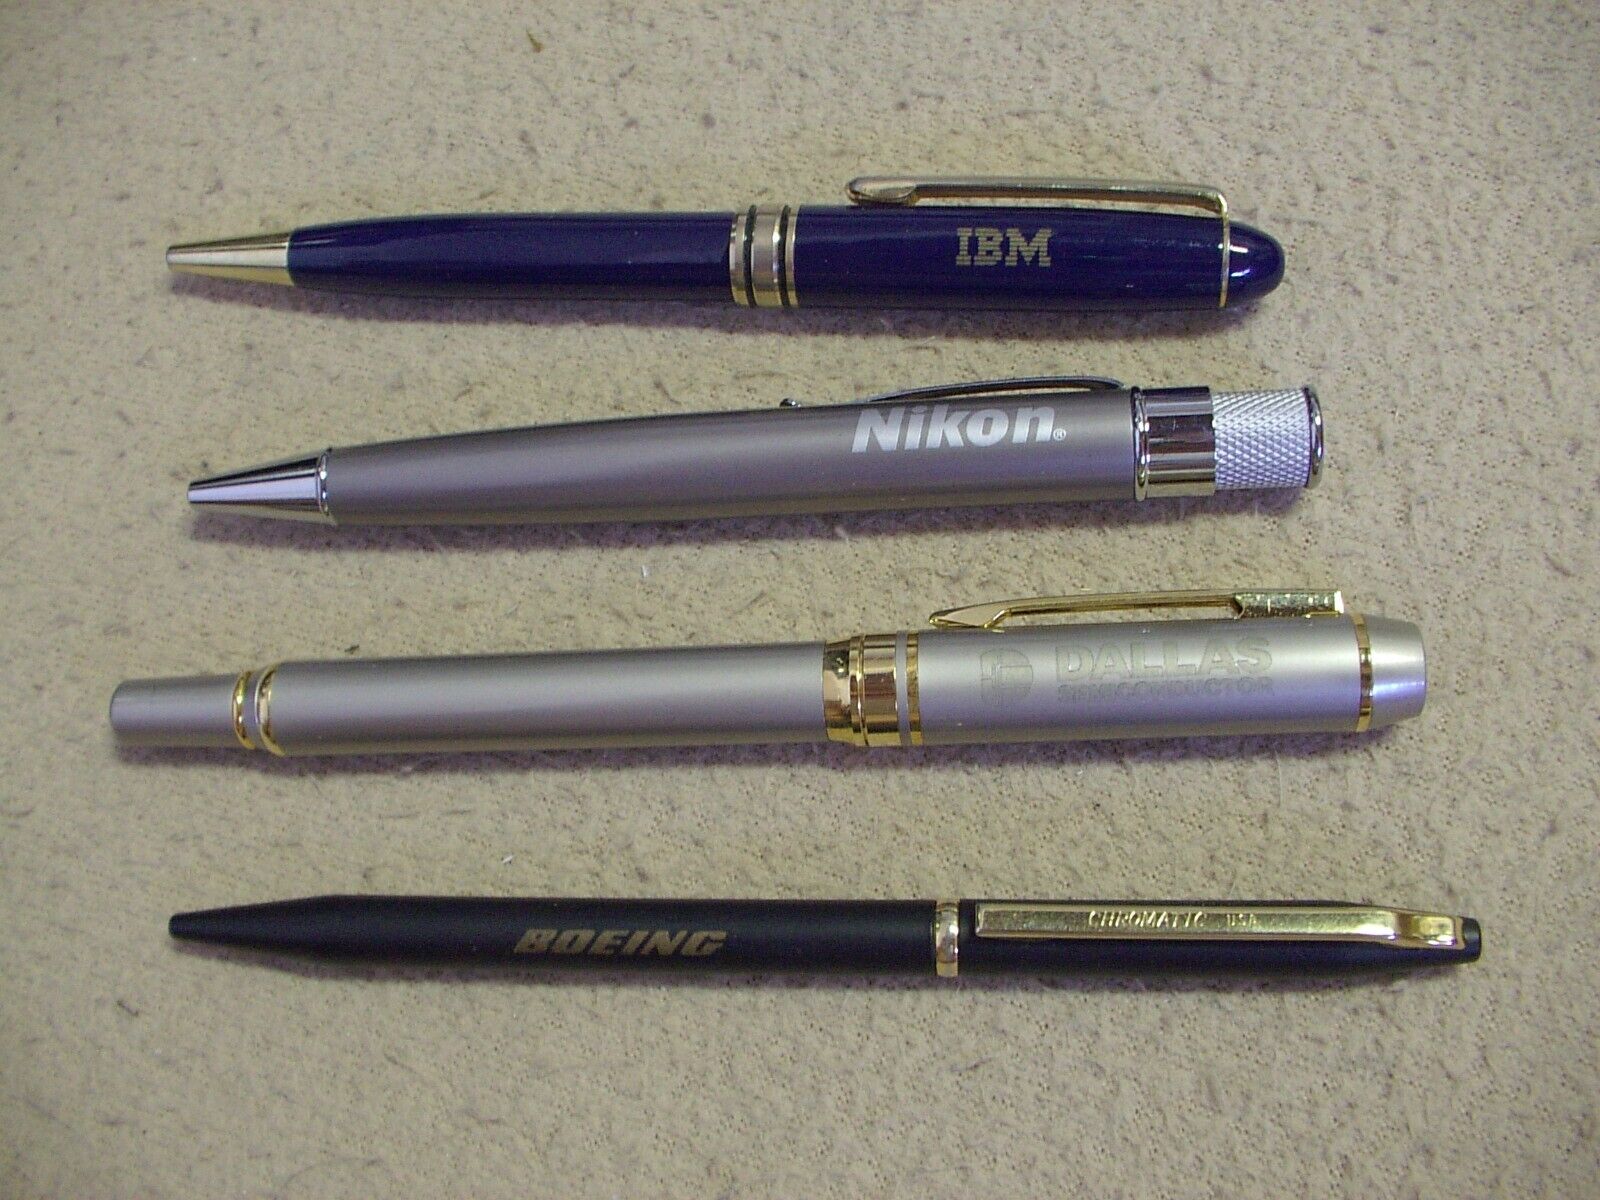 Estate Ballpoint Pen Lot, IBM, Boeing, Nikon, Dallas Semiconductor